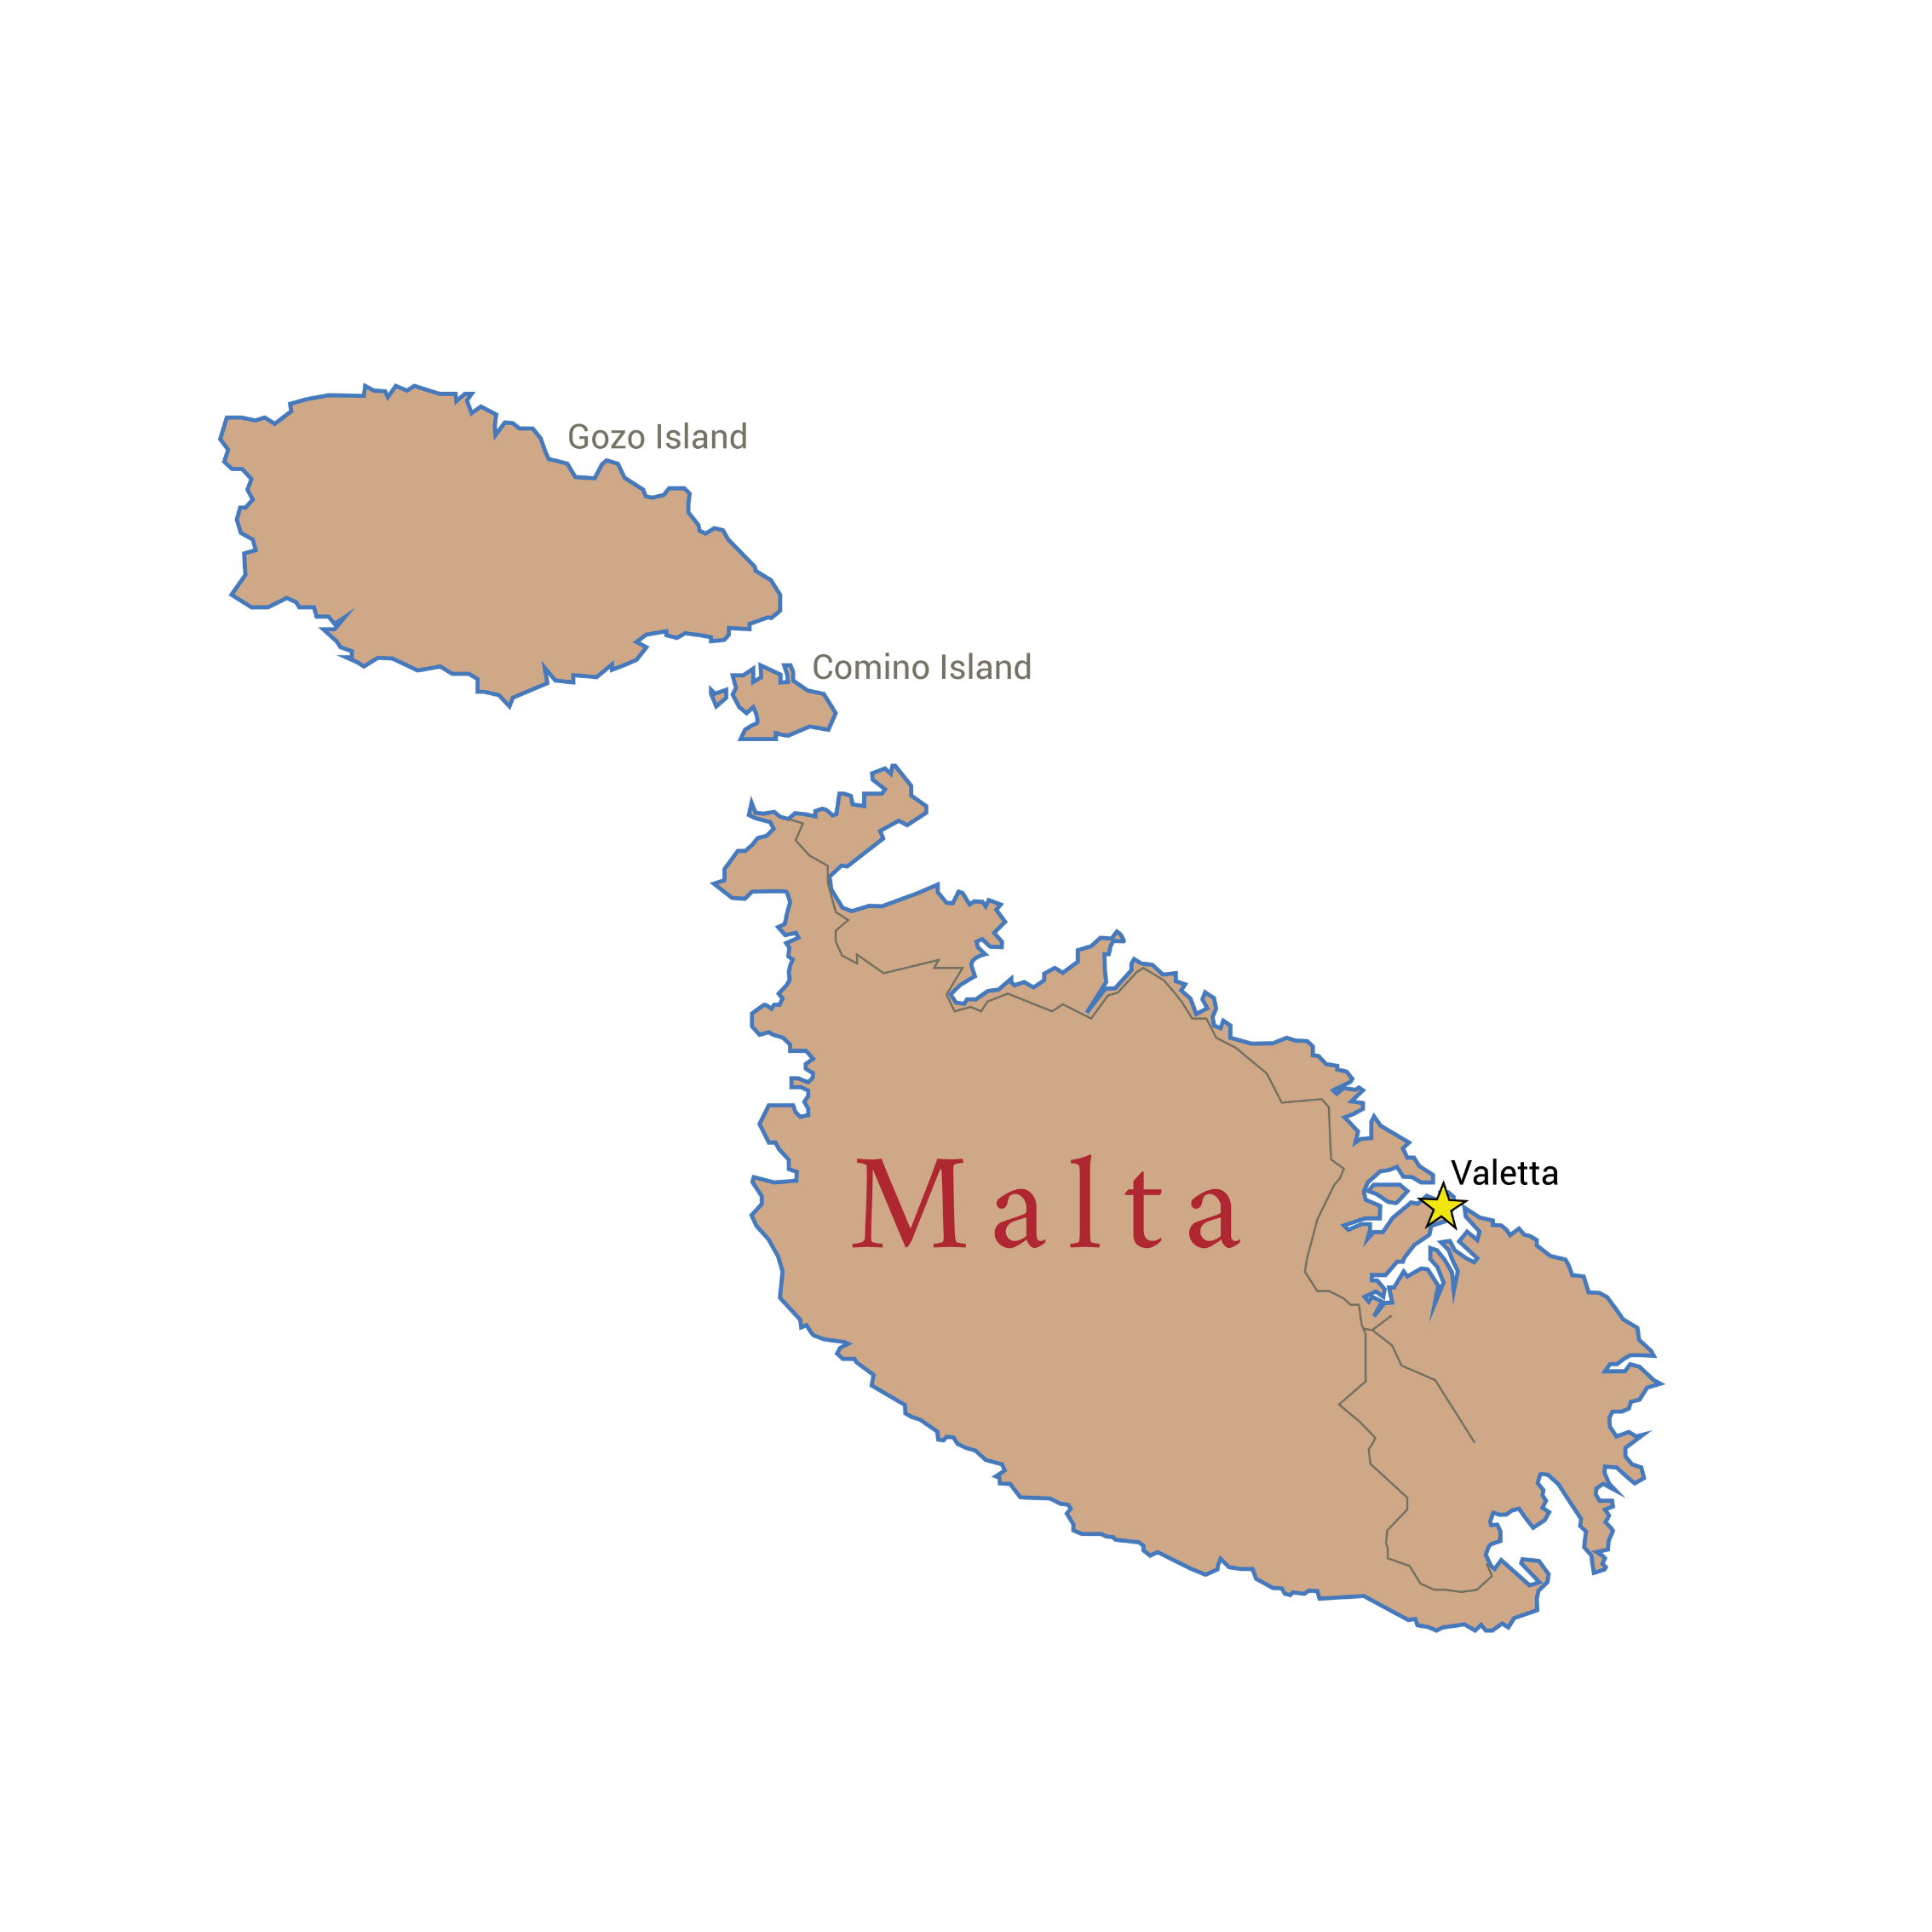 A map of Malta